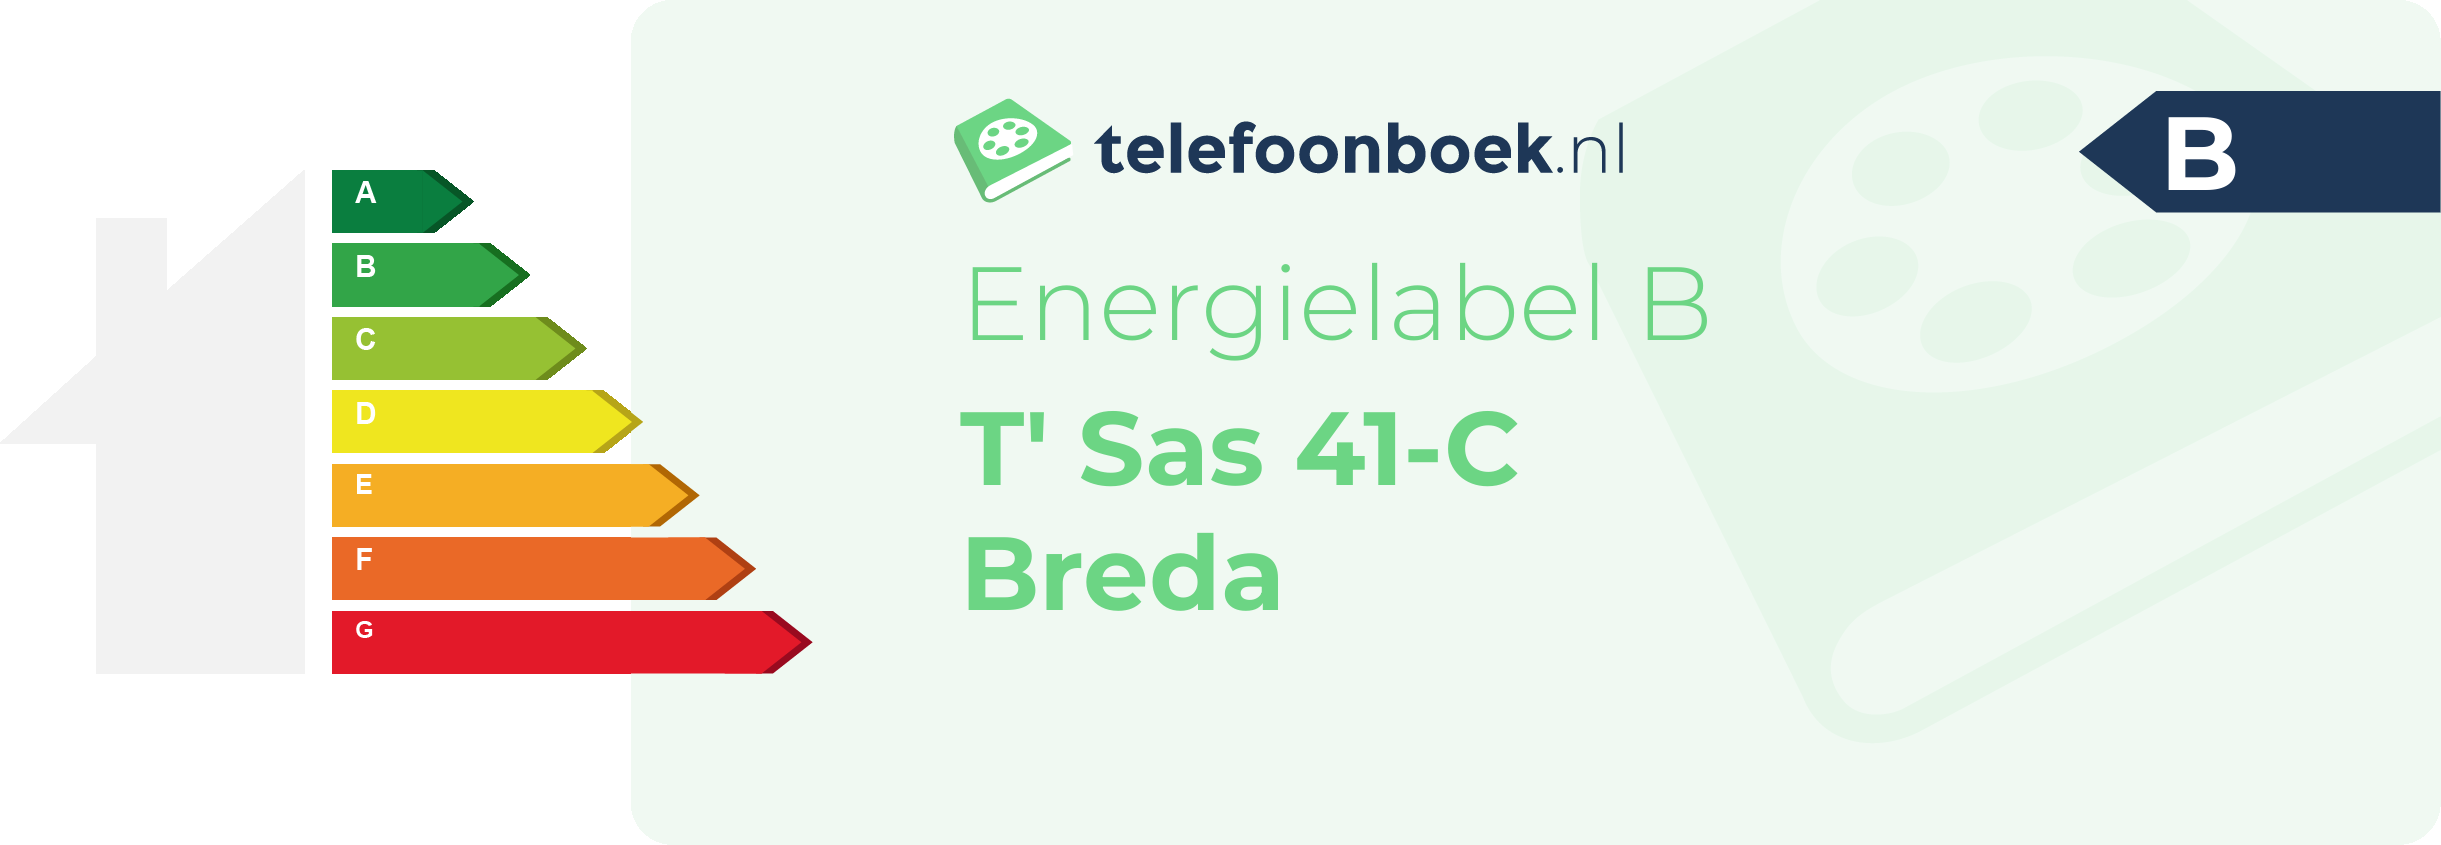 Energielabel T' Sas 41-C Breda